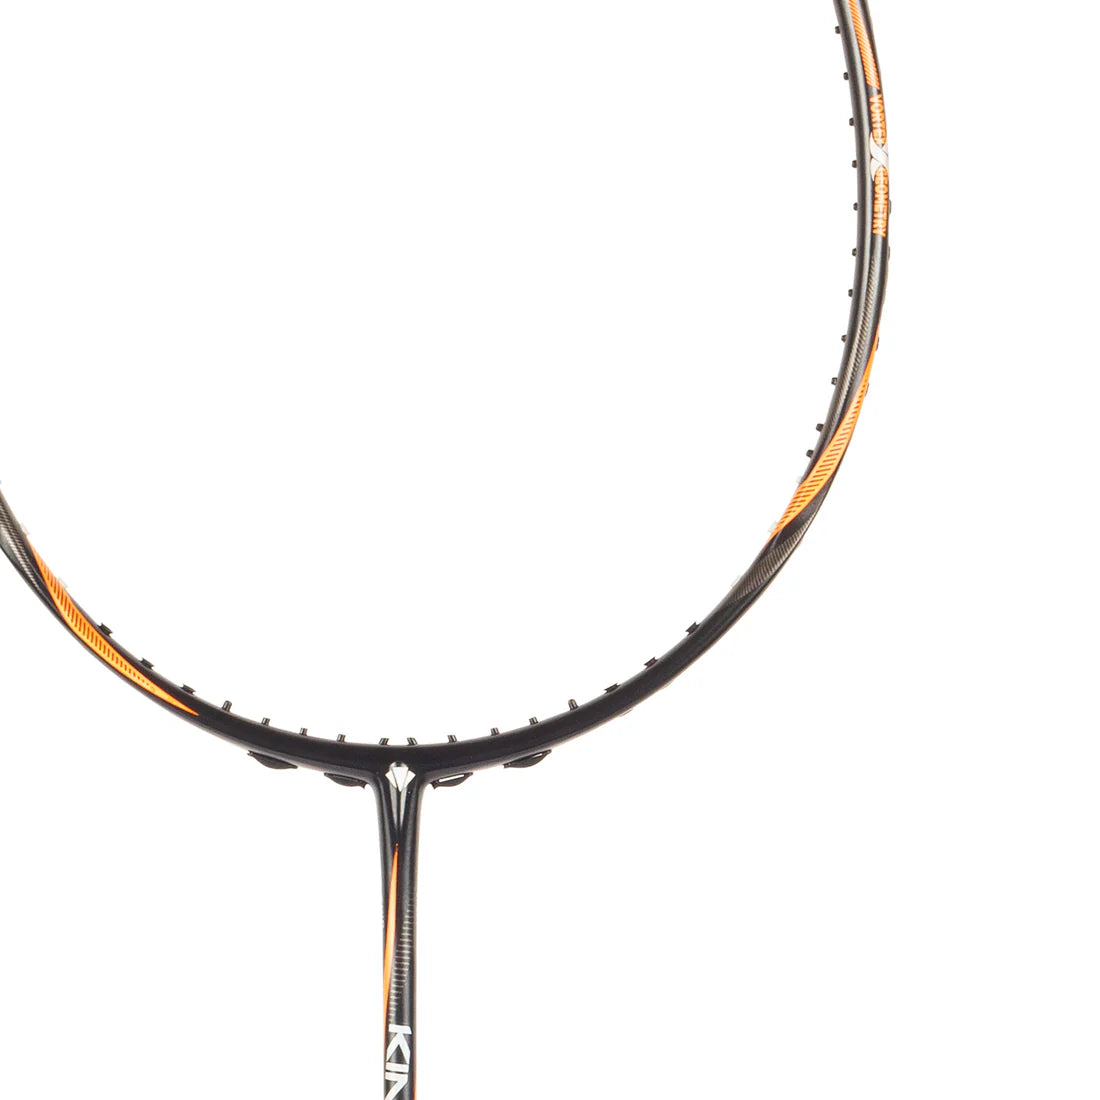 Carlton Kinesis Ultra S Pro Unstrung Badminton Racket